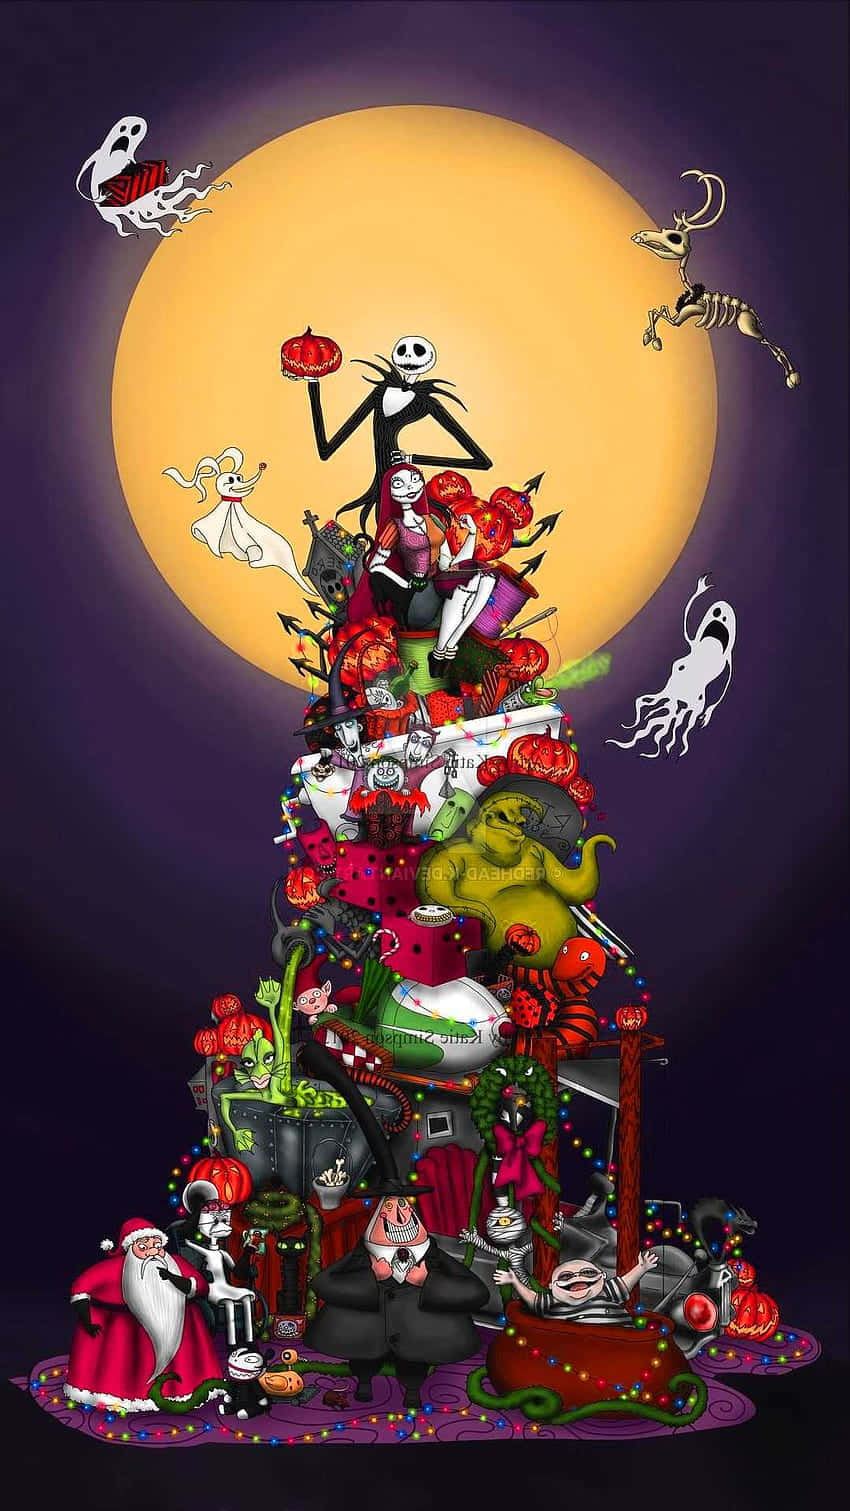 Bildtim Burtons Klassiker: Nightmare Before Christmas Handy Wallpaper